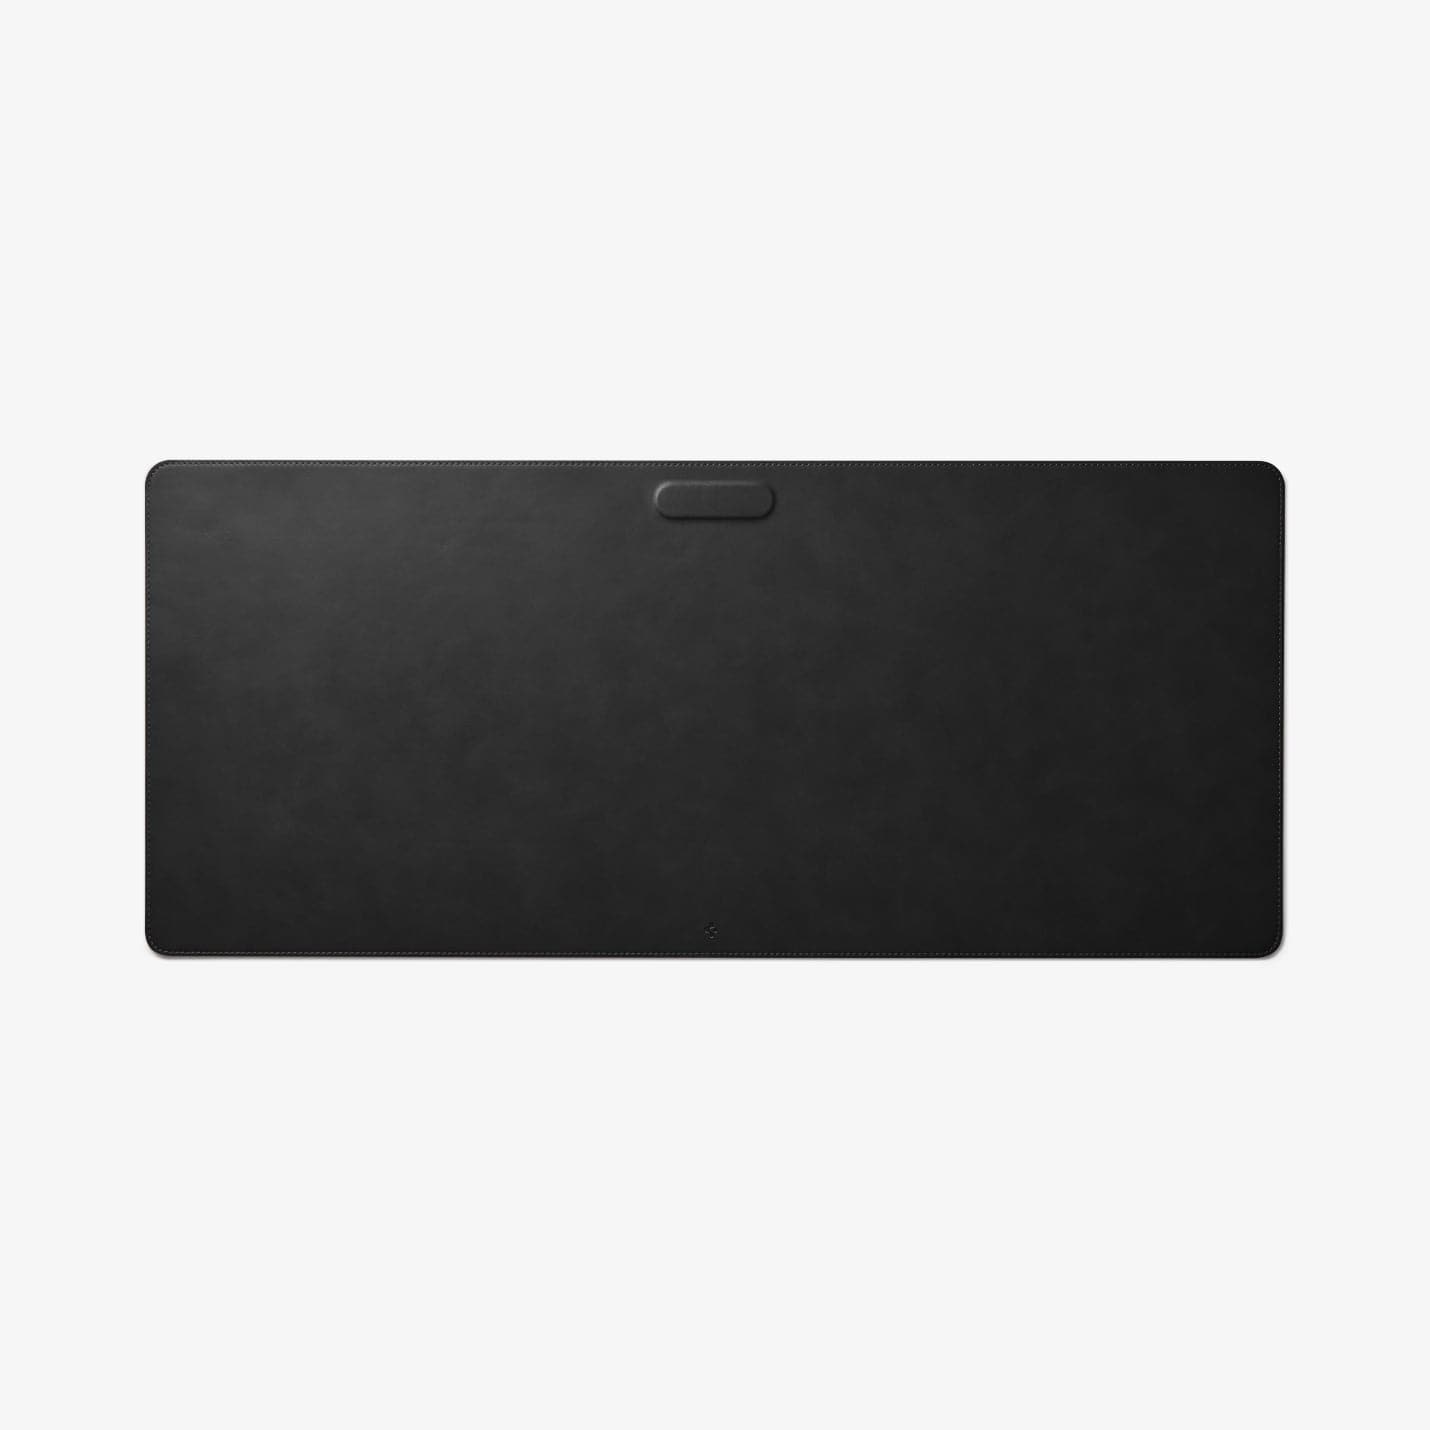 APP05267 - LD302M Magnetic Desk Pad in black showing the back